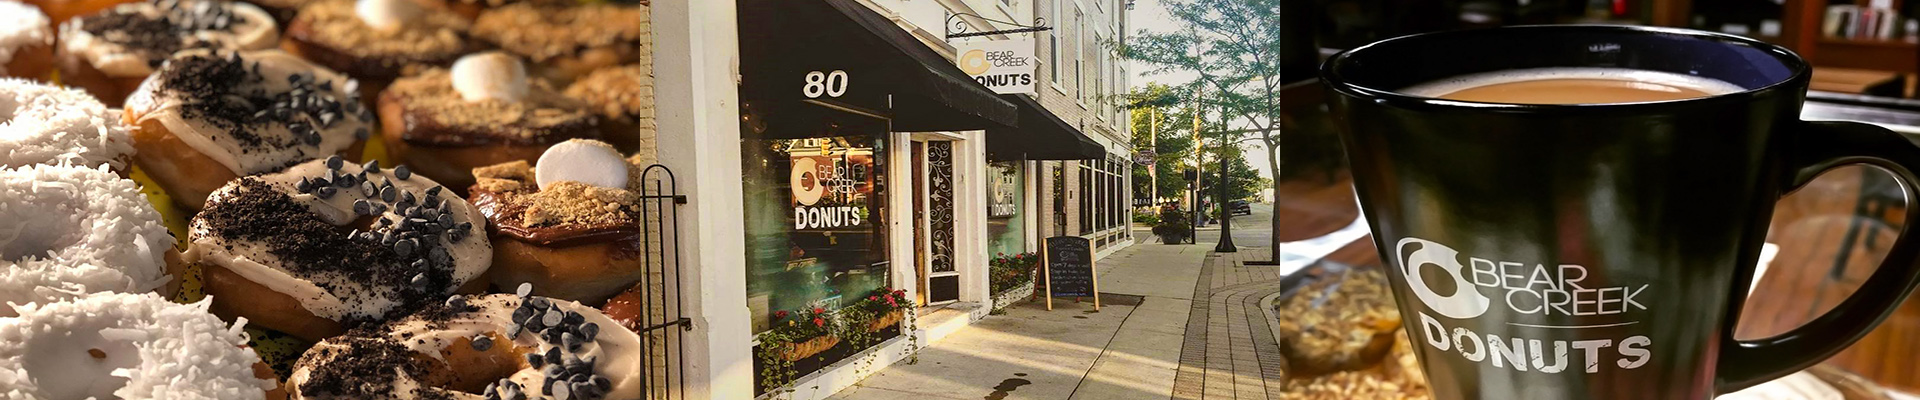 Best Donuts in Miamisburg Dayton Area